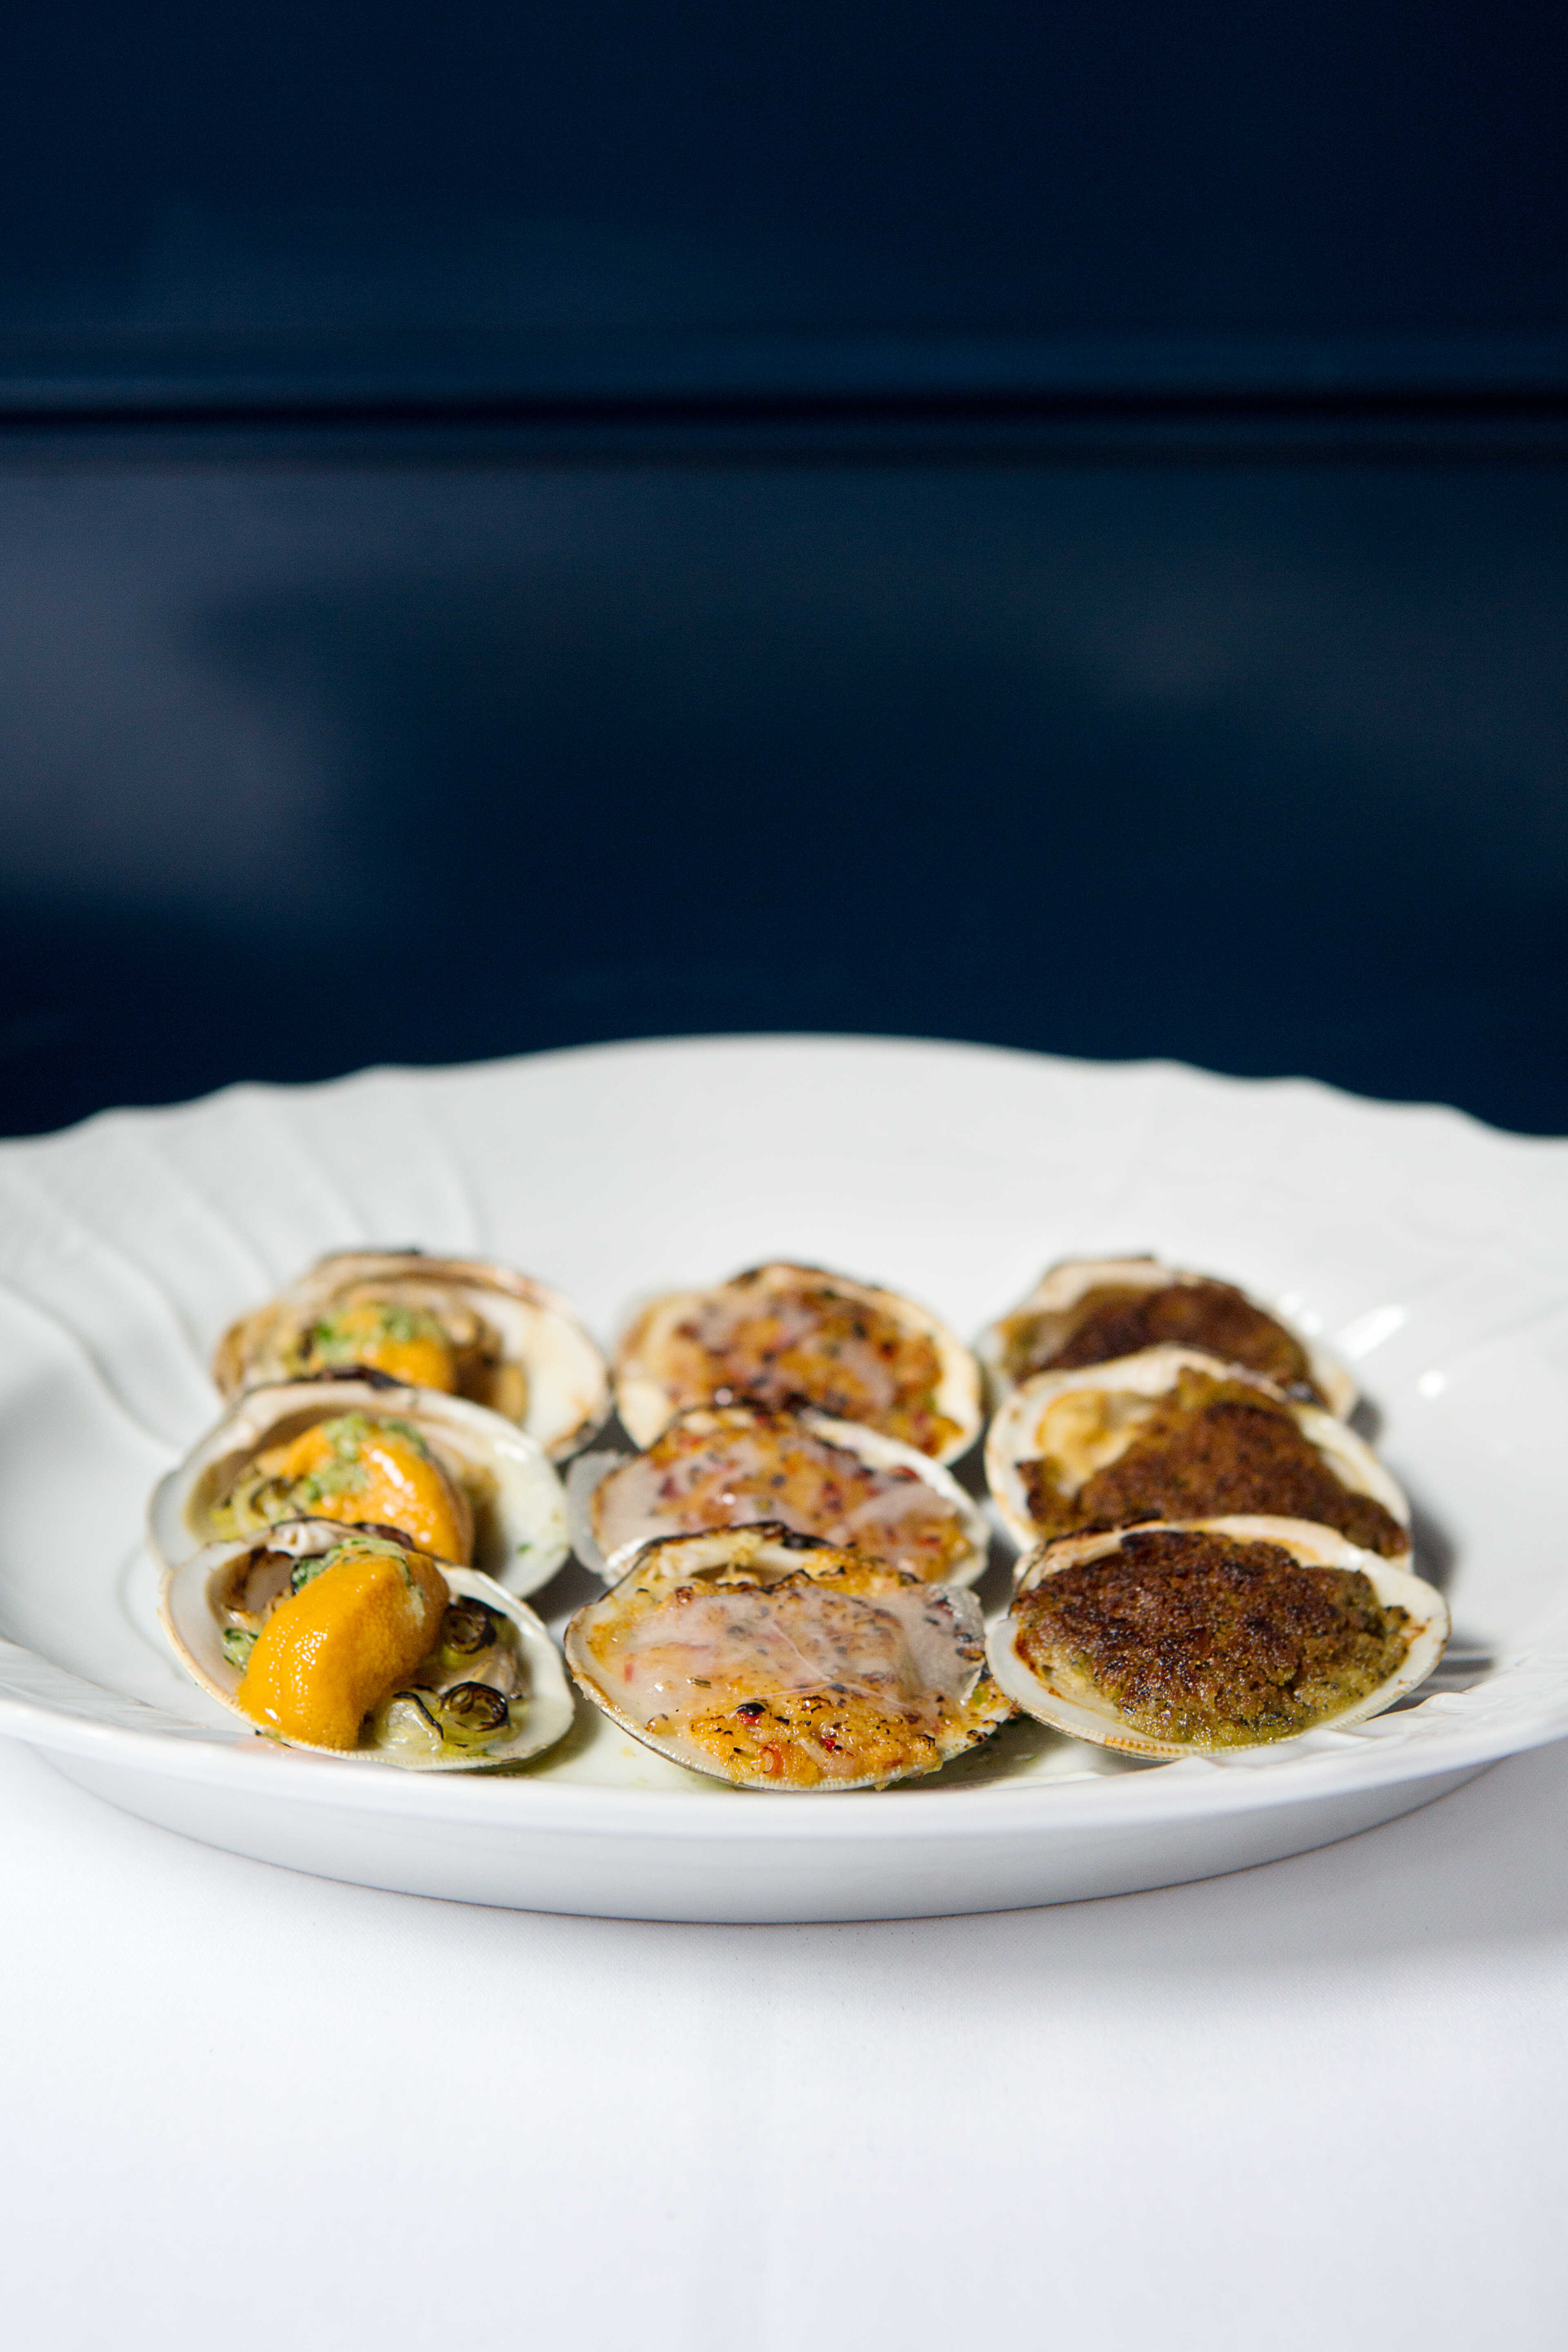 carbone vegas las menu meatballs restaurant miami clams baked aria rigatoni previous